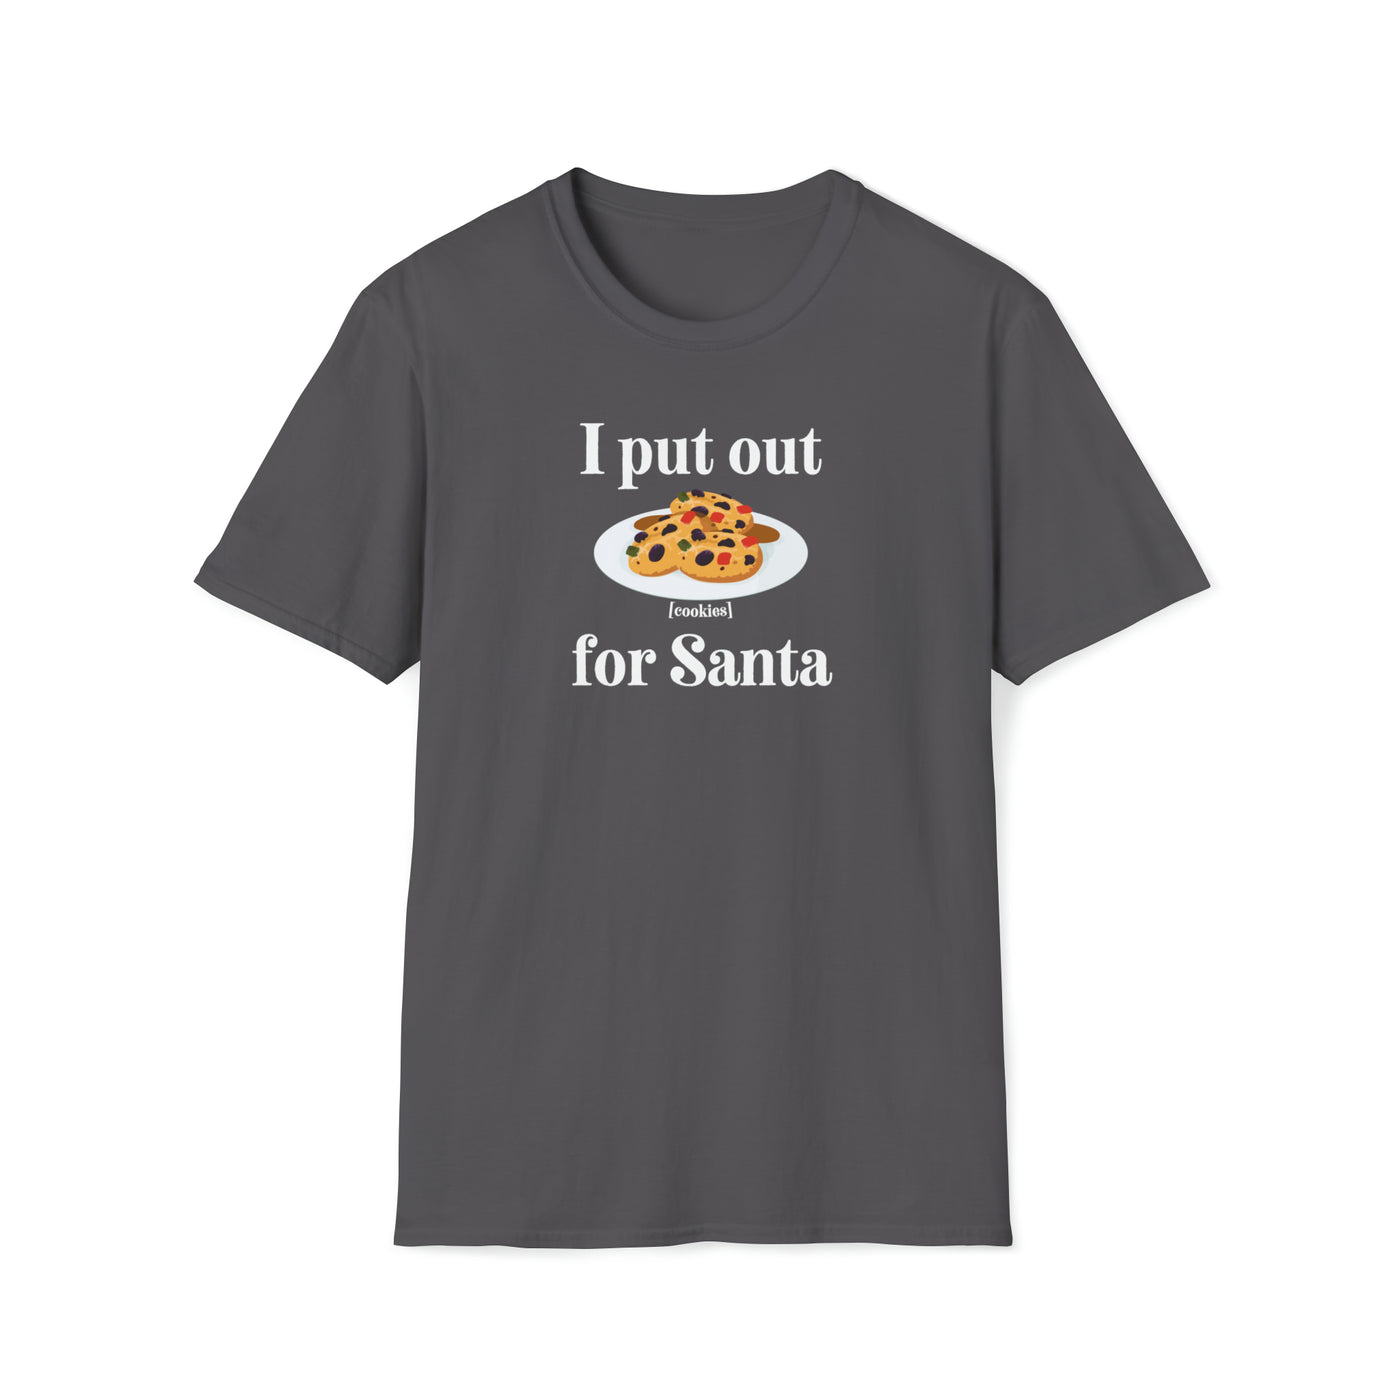 I Put Out For Santa Unisex T-Shirt